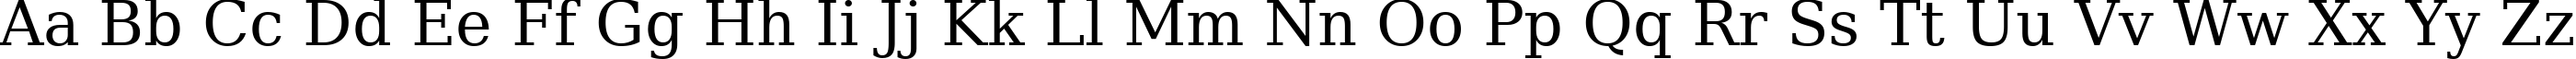 Пример написания английского алфавита шрифтом ae_Tholoth